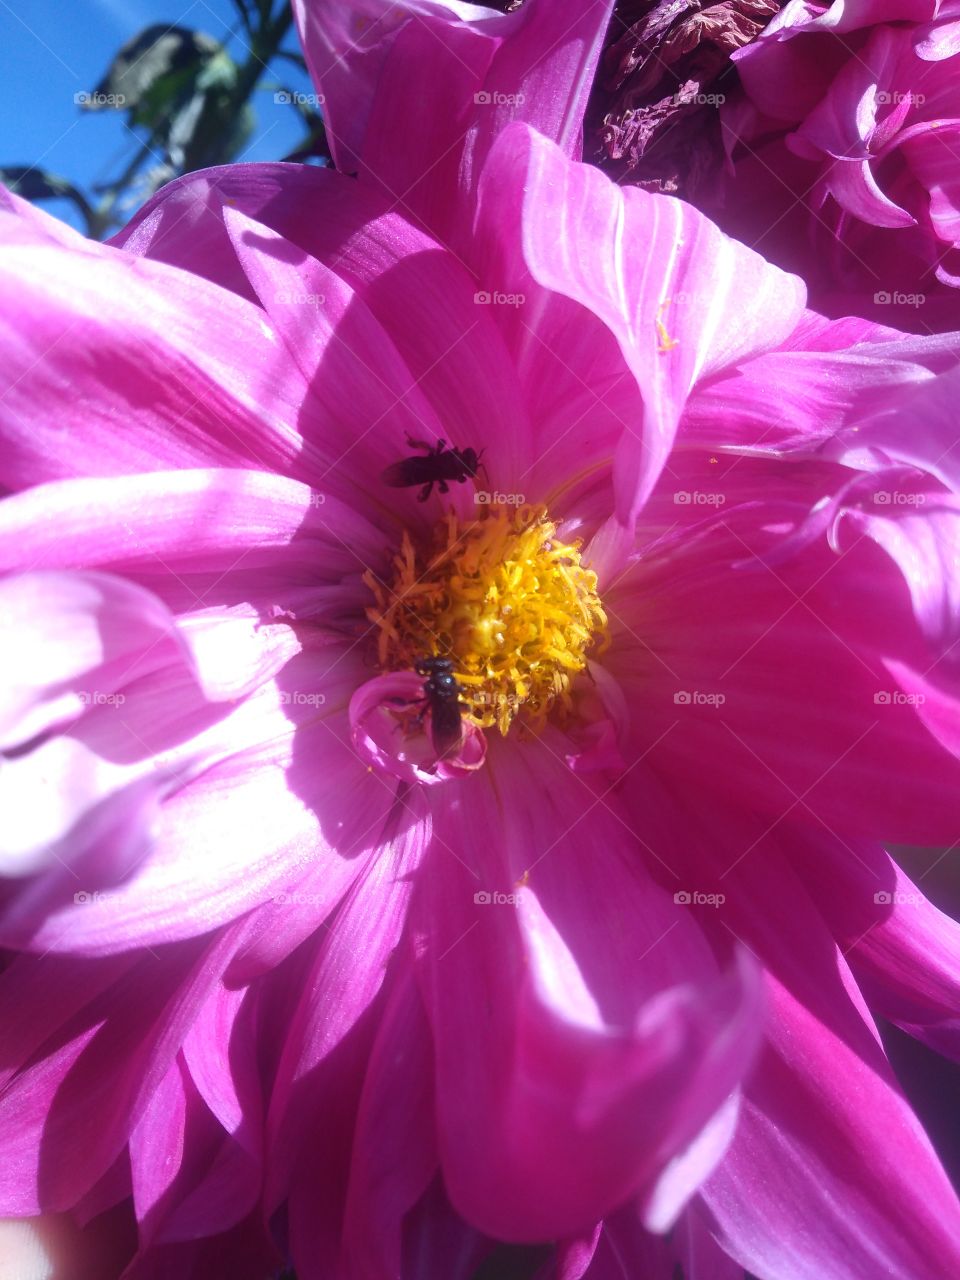 Bees in a old flower...Abelhas numa velha flor...